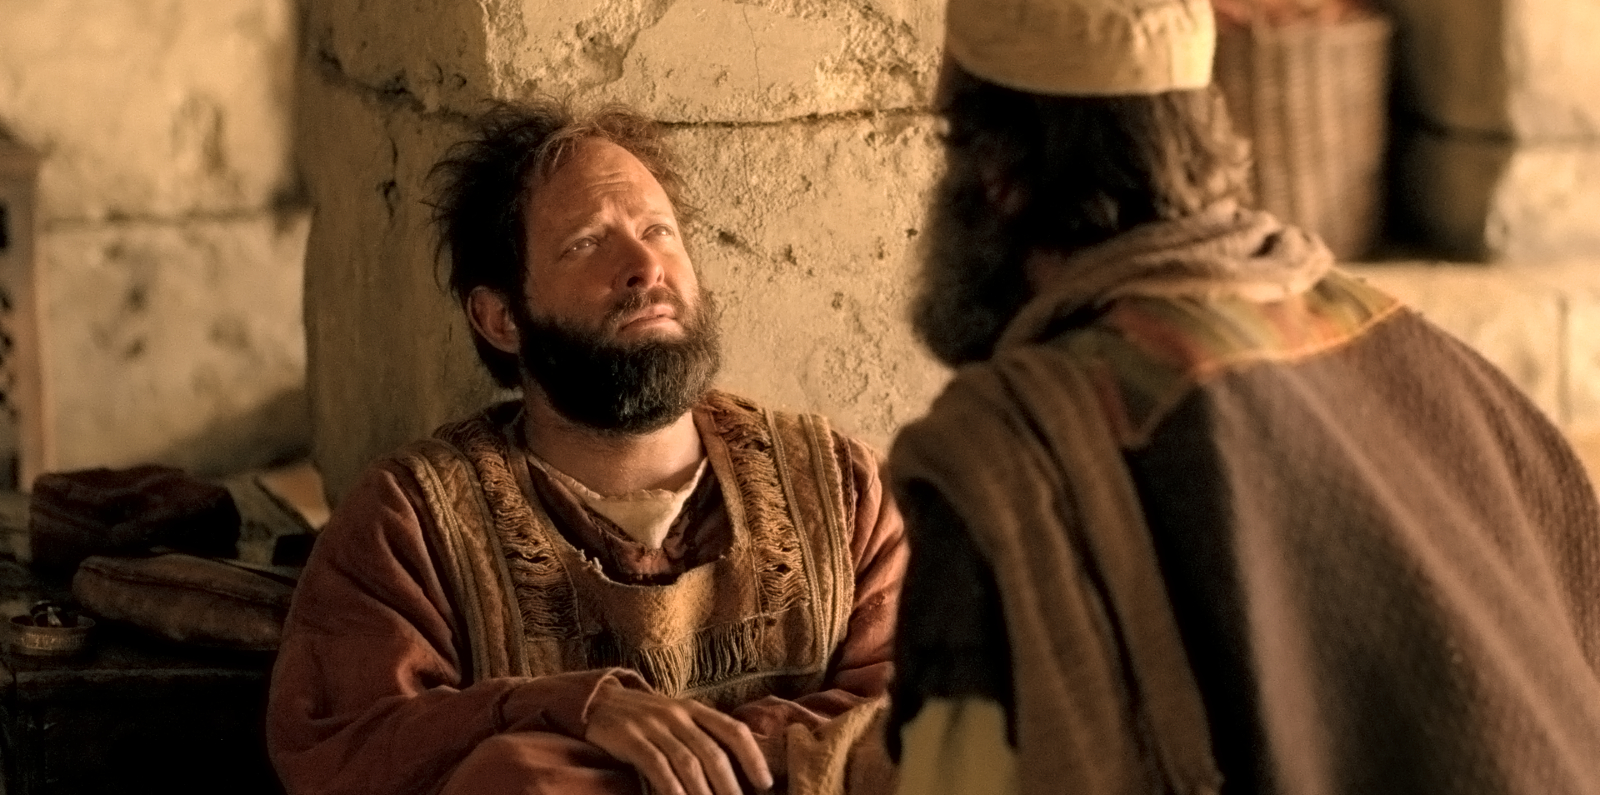 Ananias Finds Saul